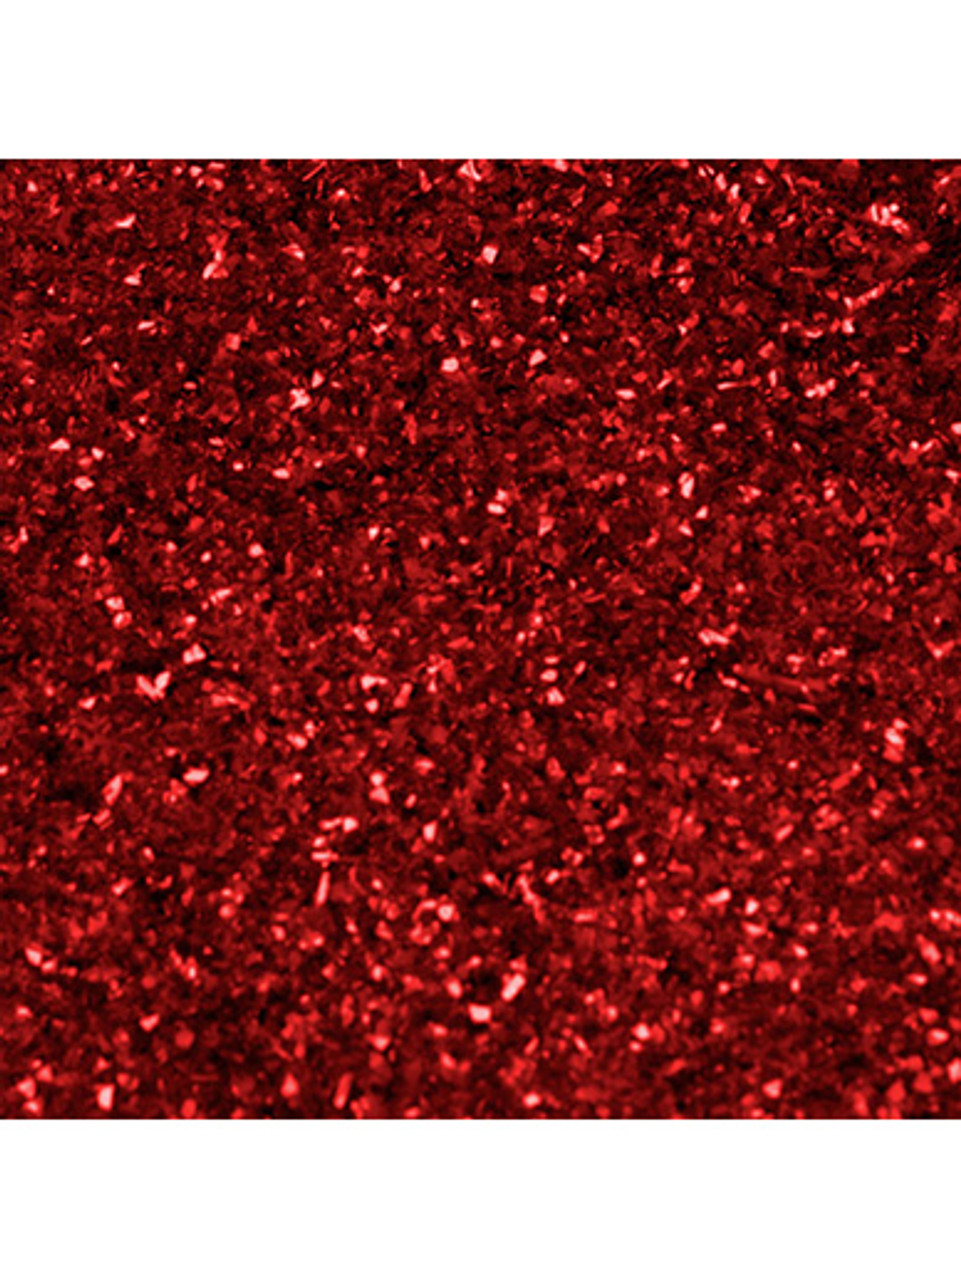 Rainbow Dust Edible Glitter in Red